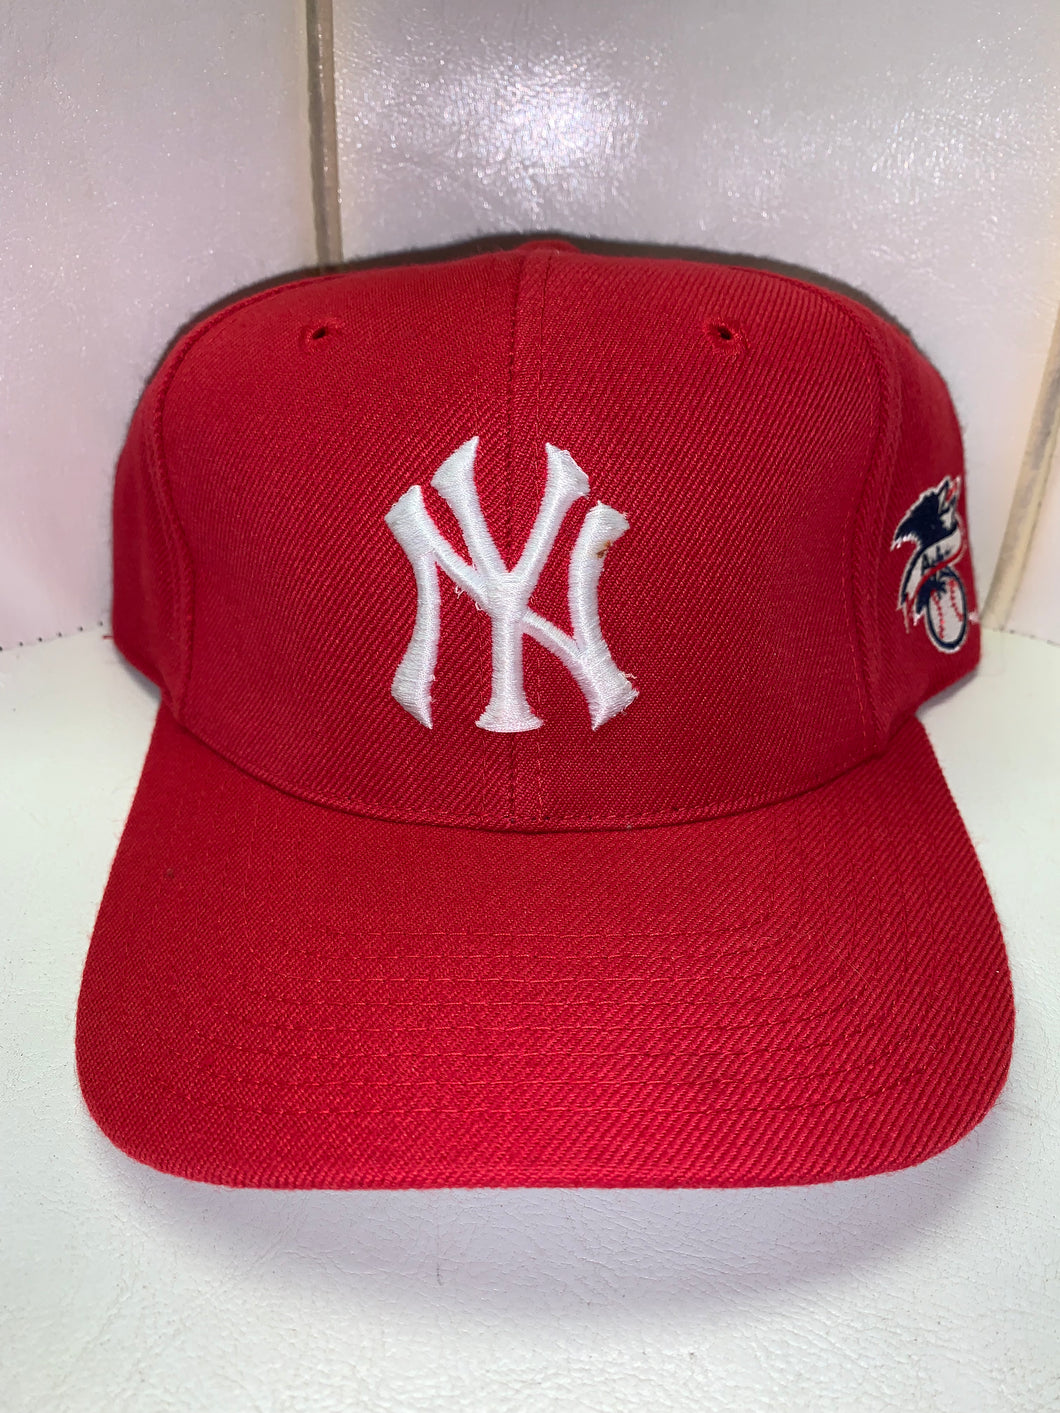 Vintage New York Yankees G Cap Strapback Hat